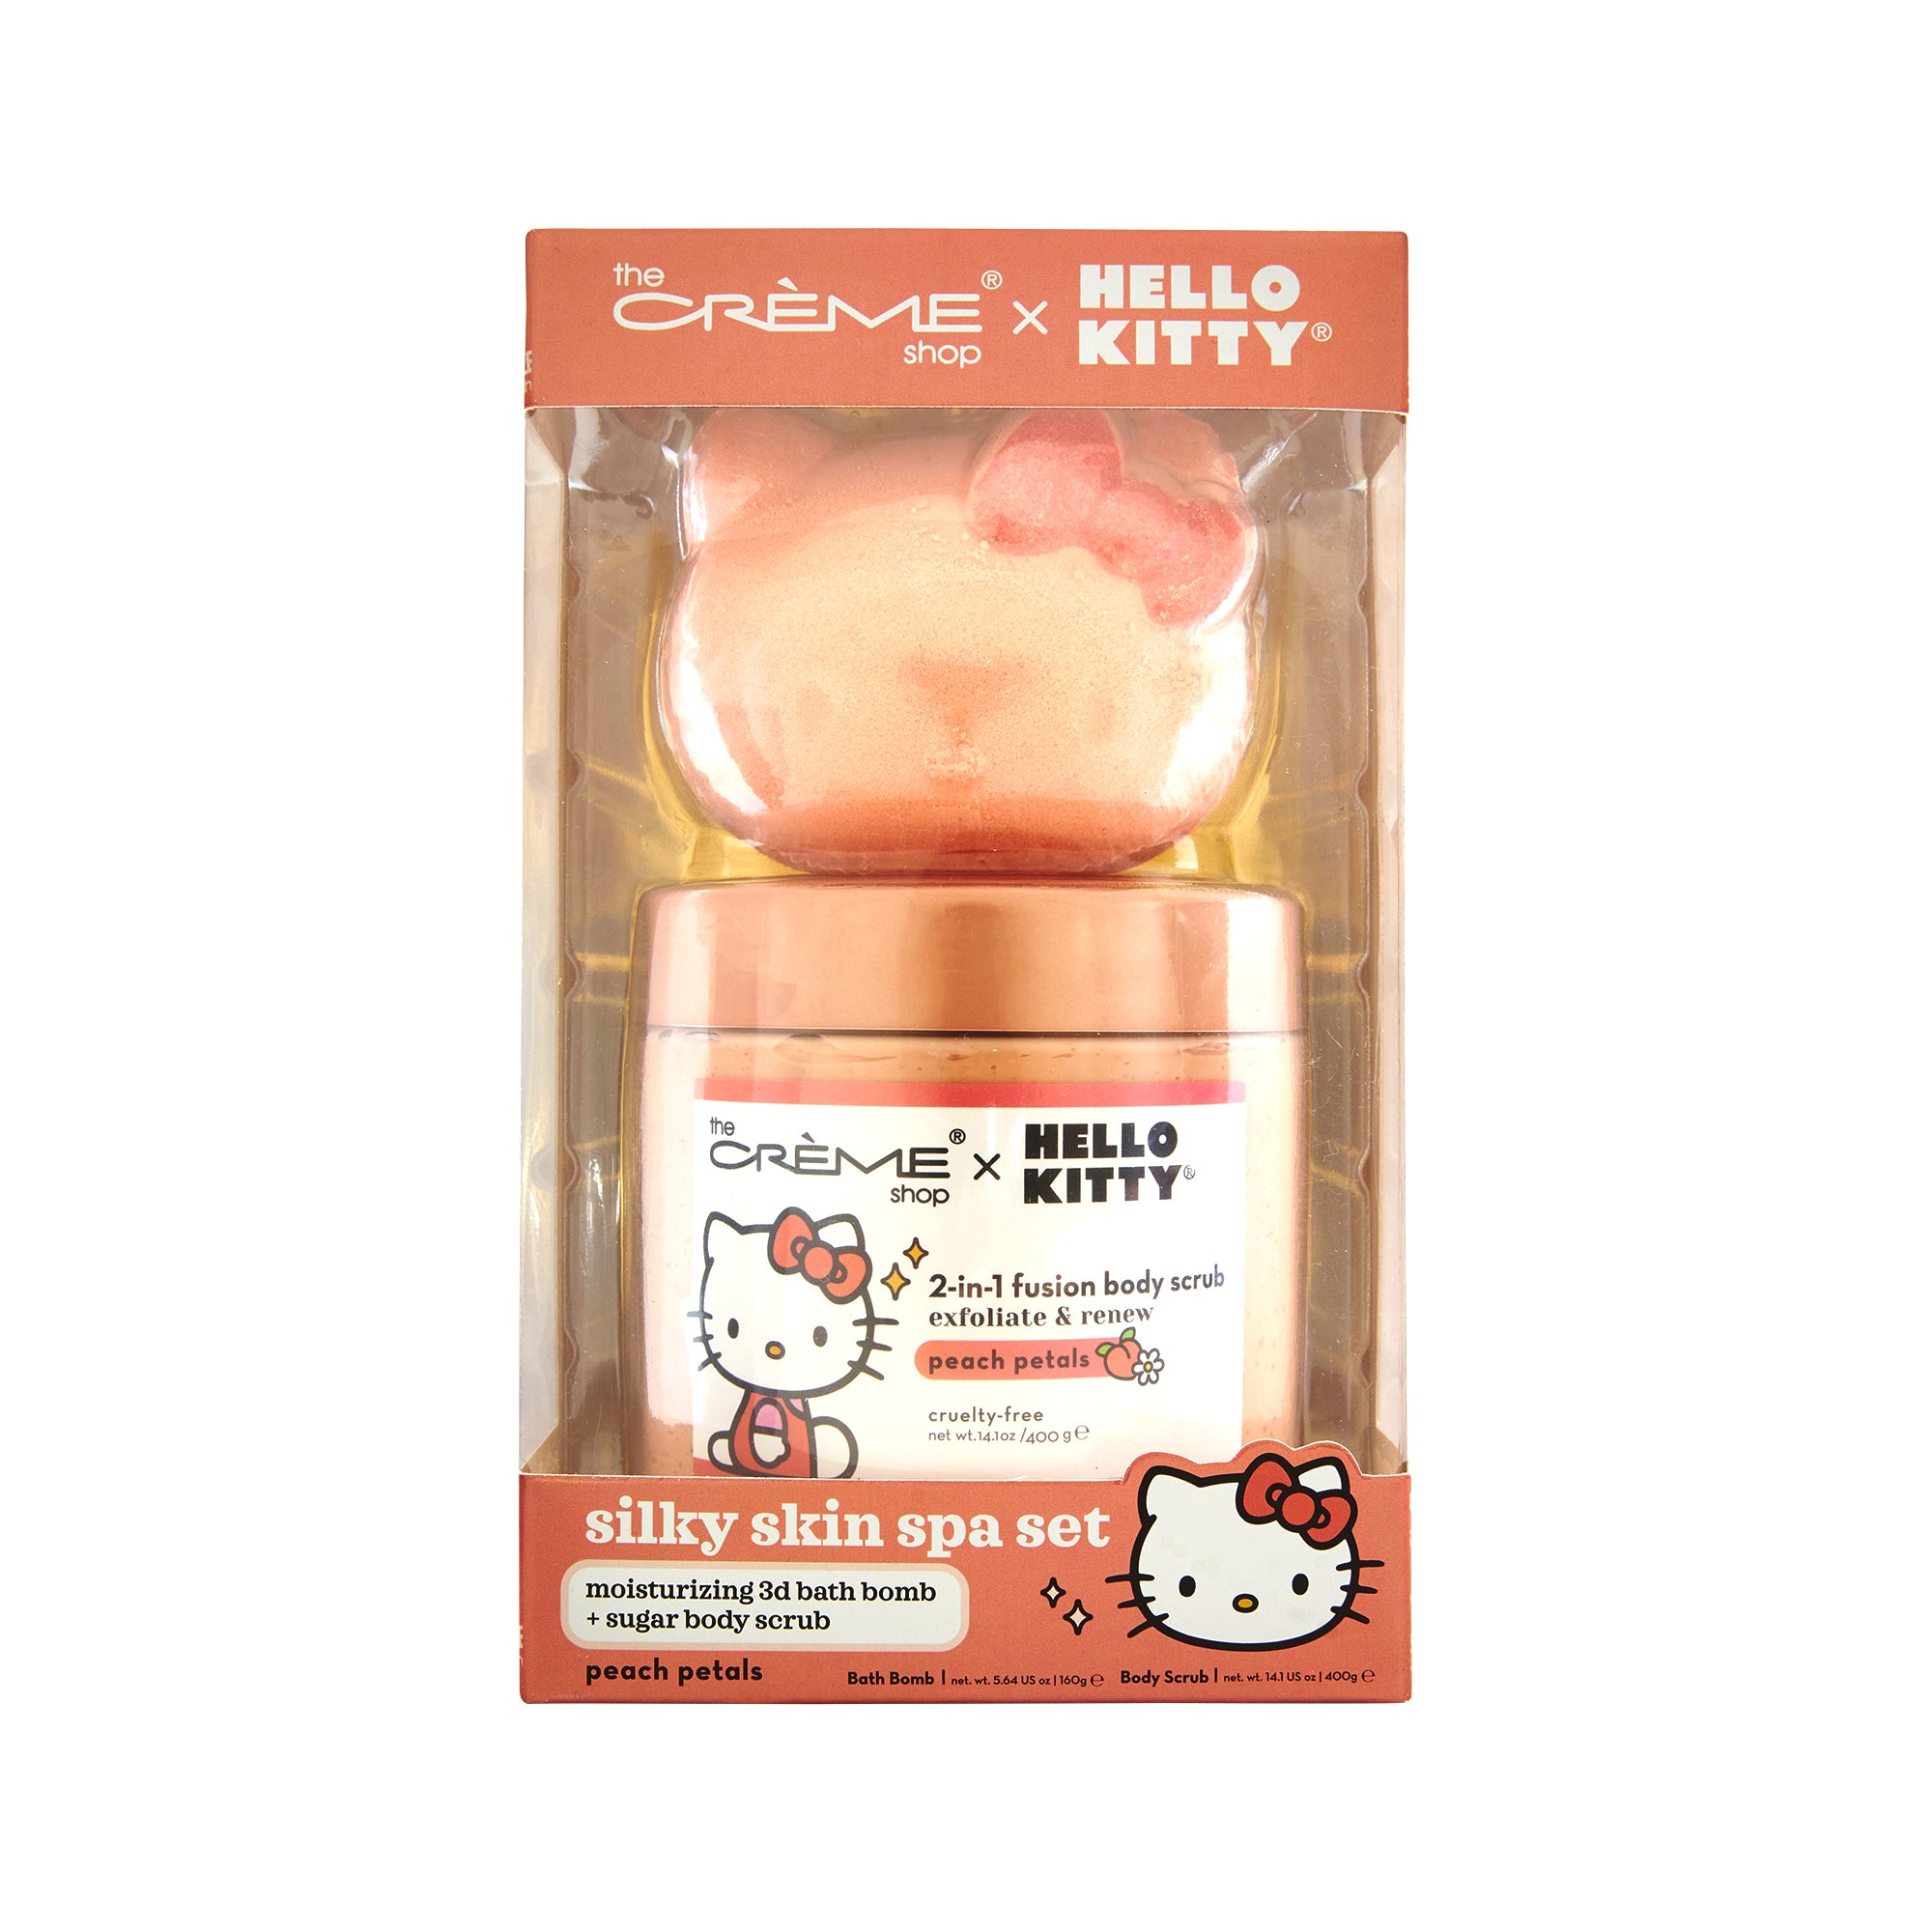 Hello Kitty x The Crème Shop Silky Skin Spa Set (Peach Petals) Beauty The Crème Shop   